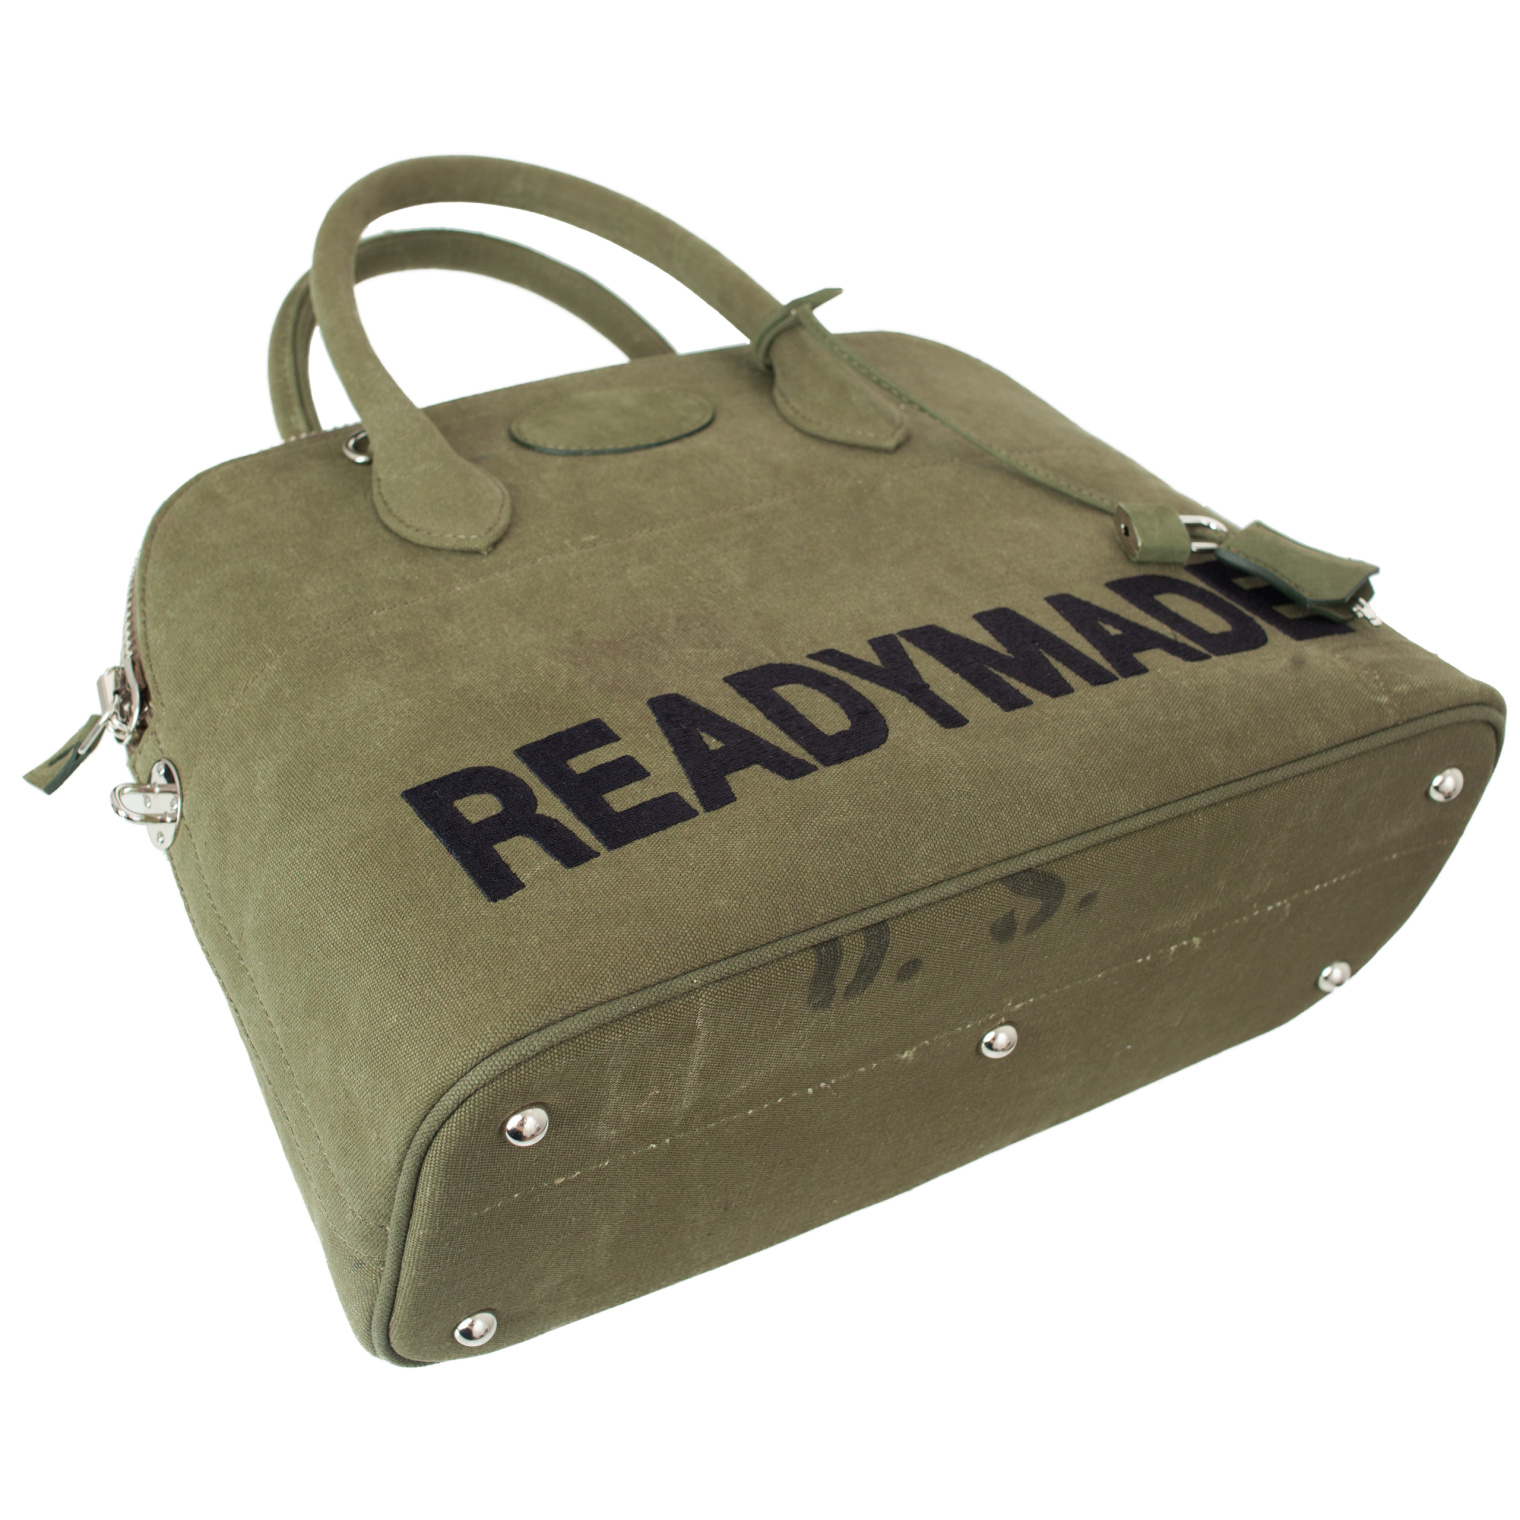 Buy Readymade men green daily medium bag for $3,660 online on SV77